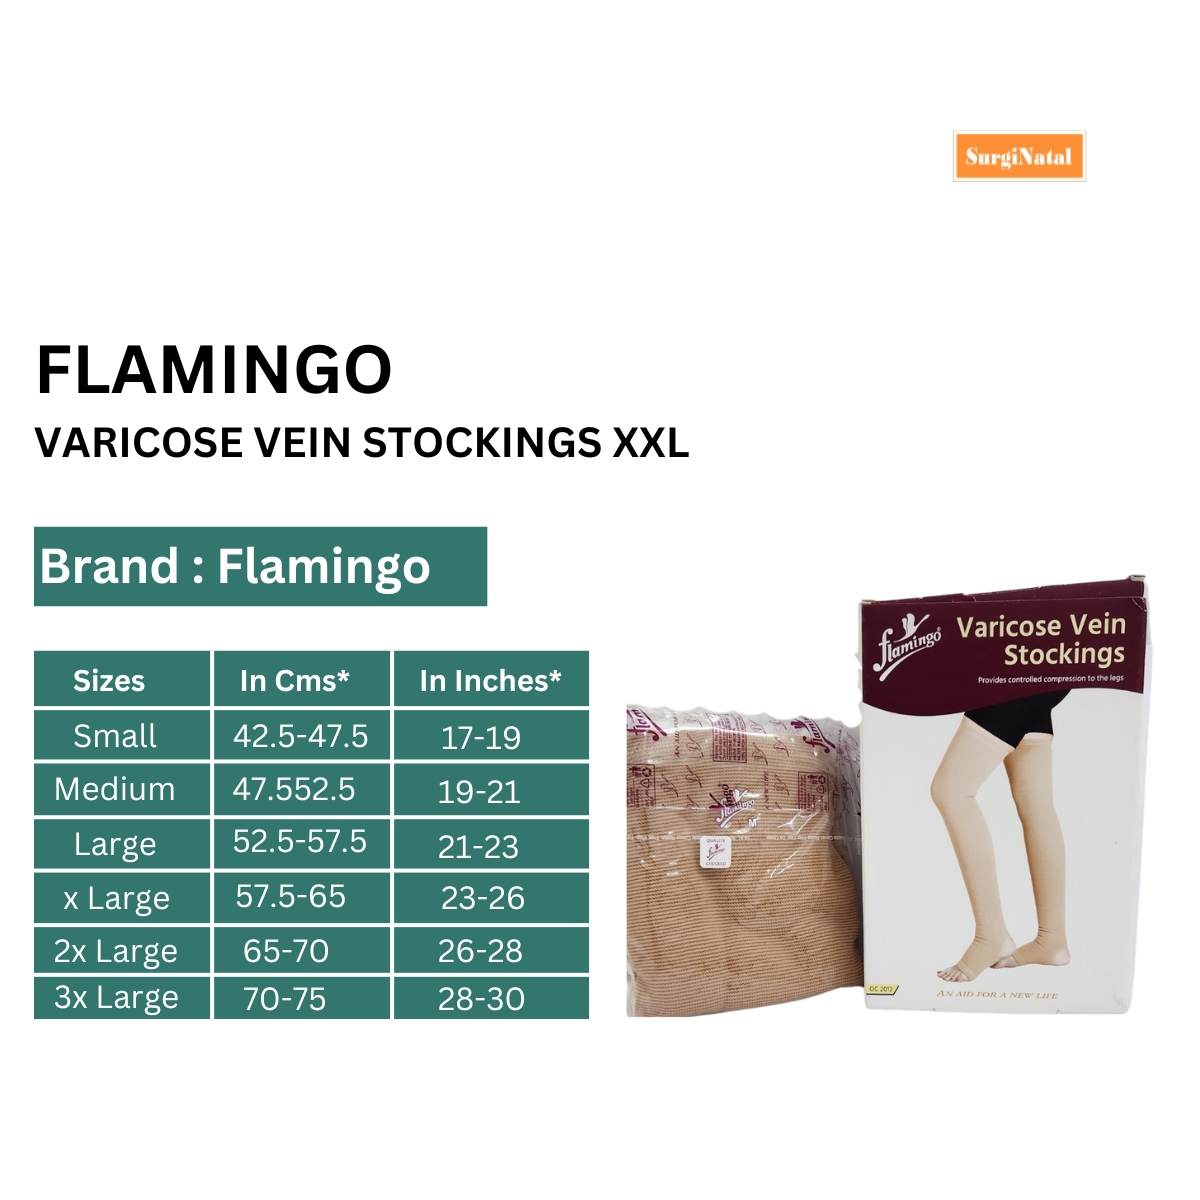 flamingo varicose vein stockings xxl